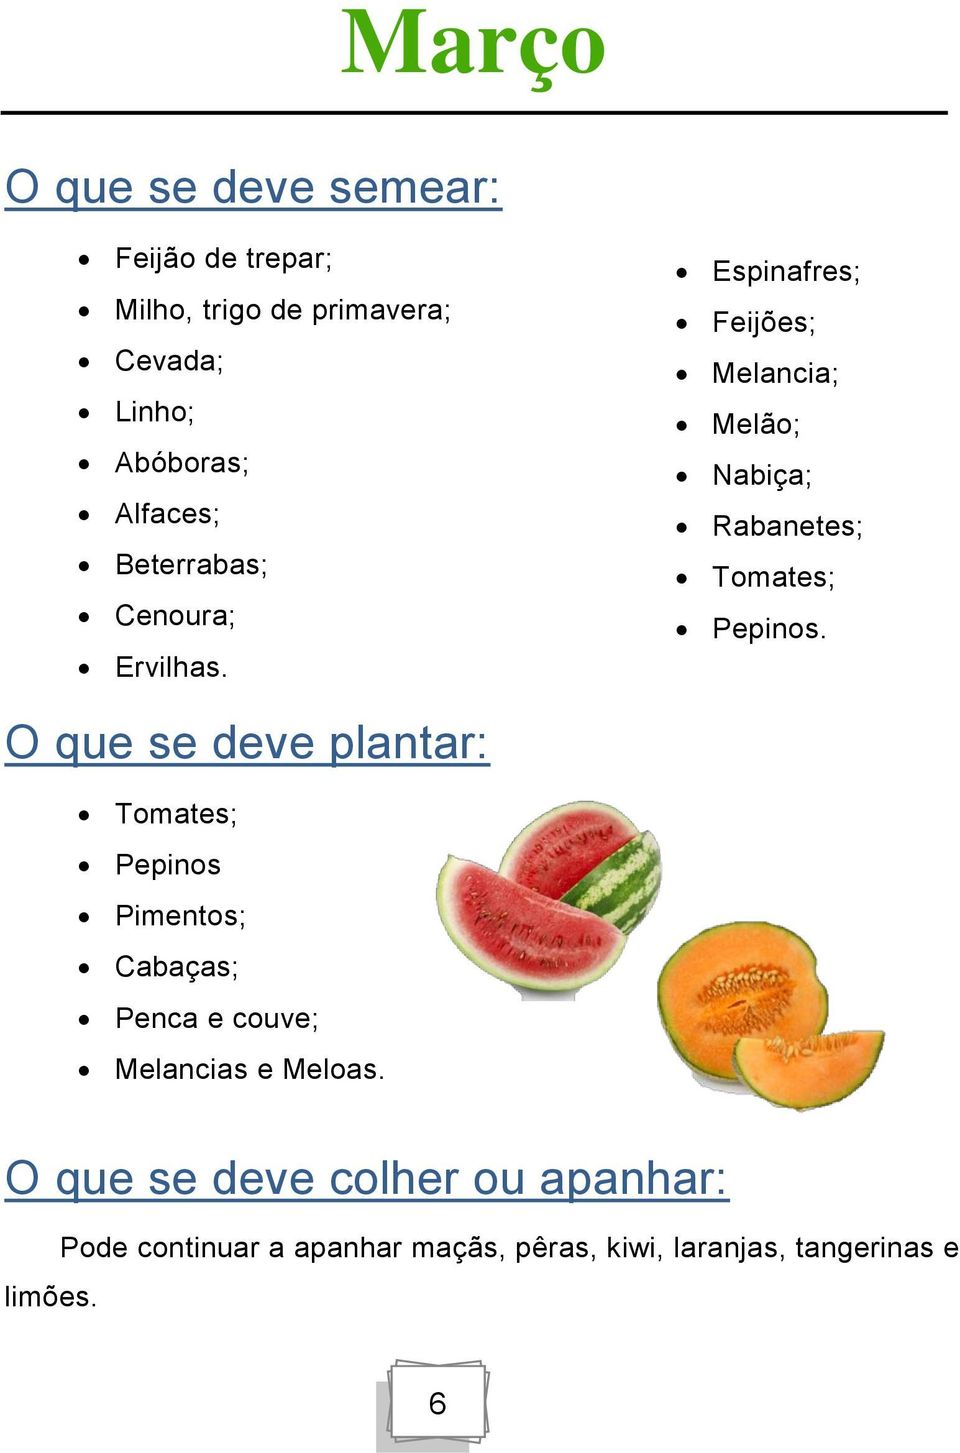 Espinafres; Feijões; Melancia; Melão; Nabiça; Rabanetes; Tomates; Pepinos.